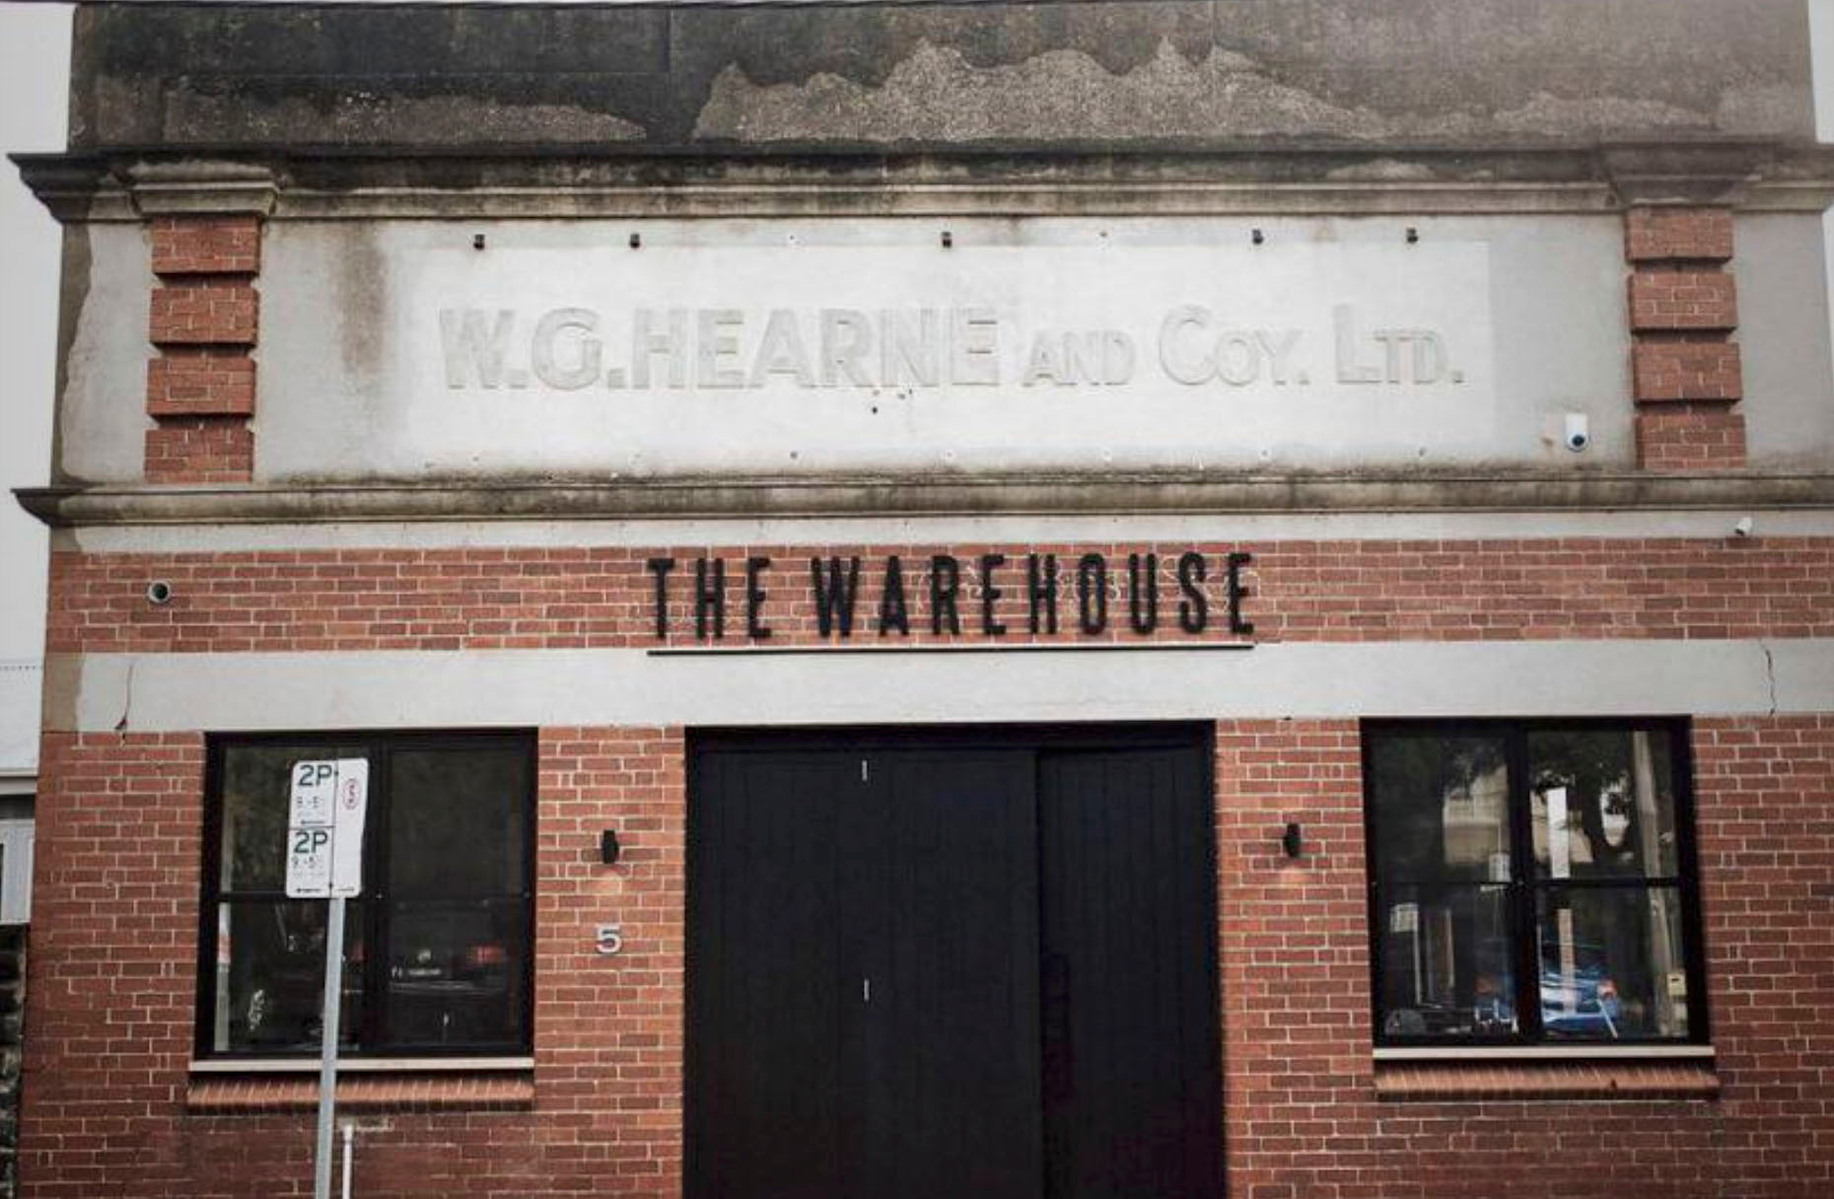 
The Warehouse Geelong 